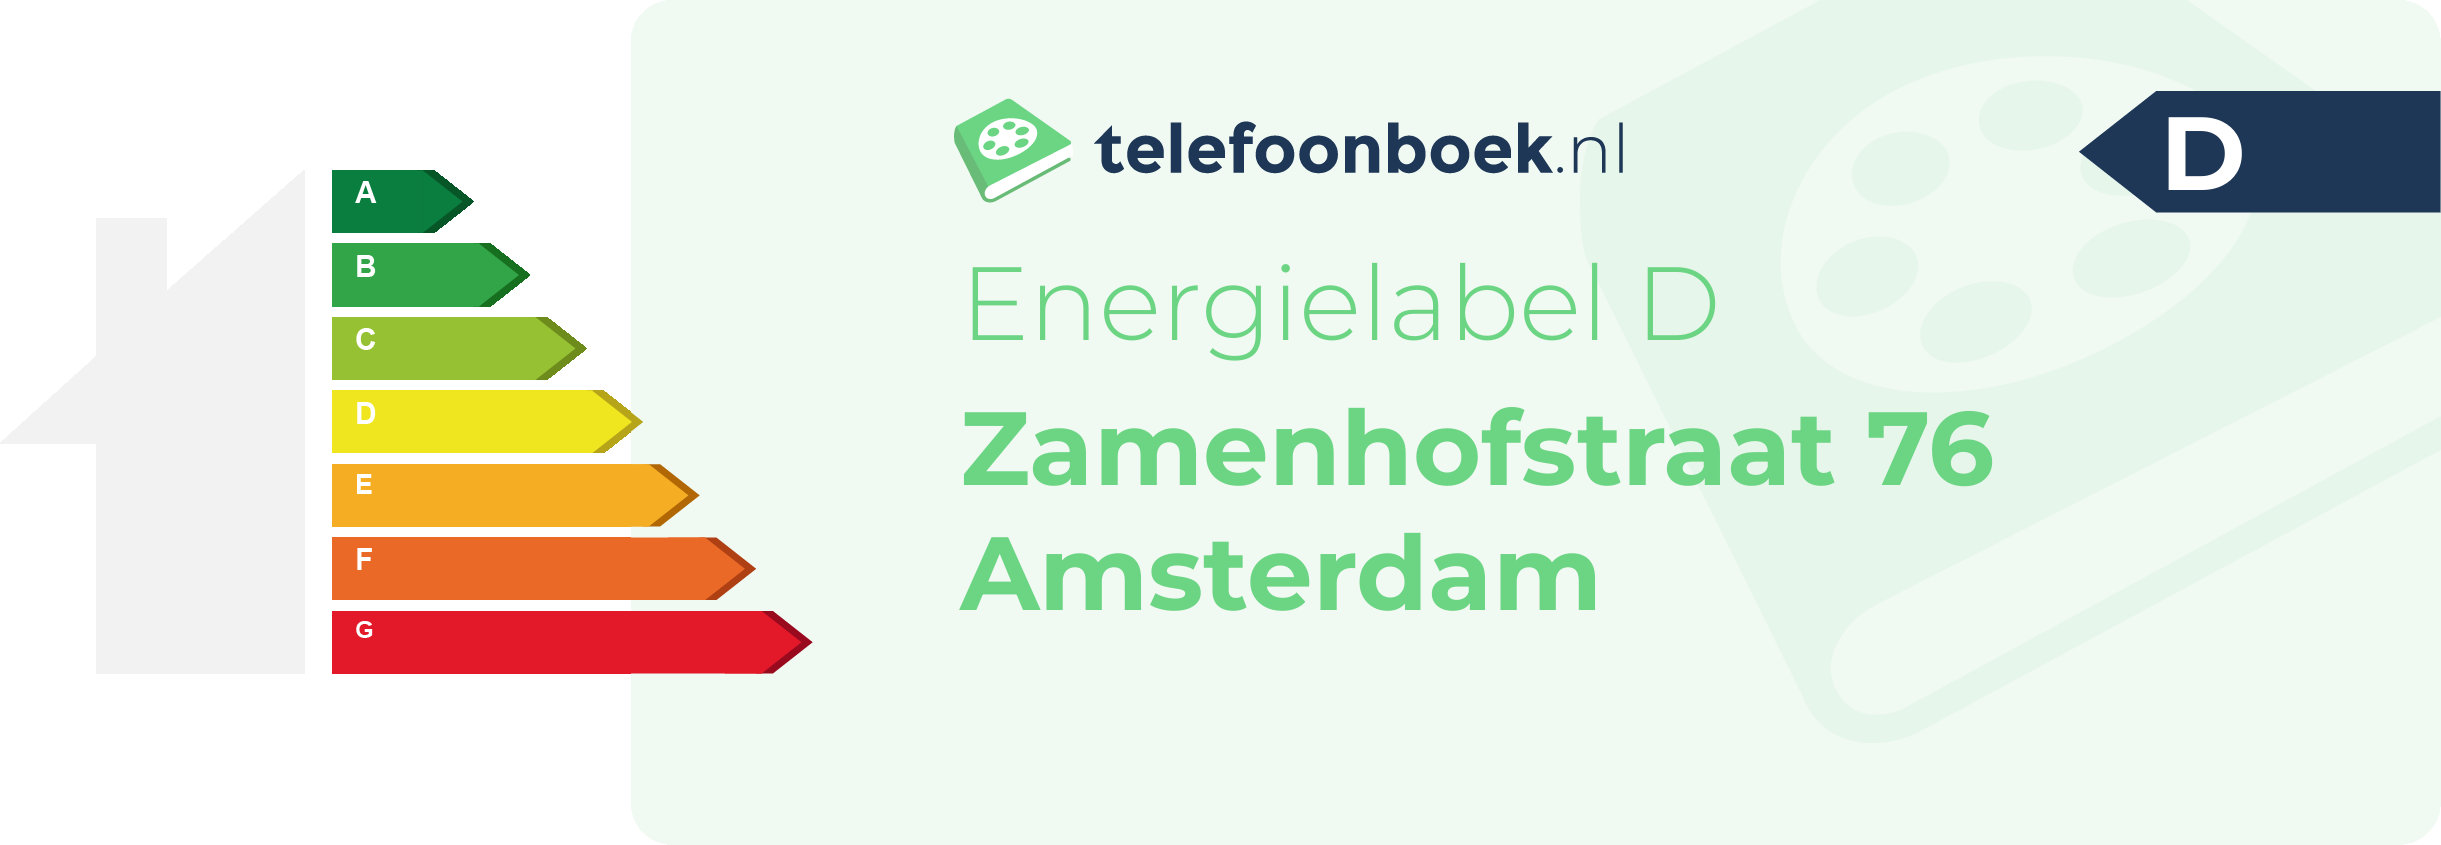 Energielabel Zamenhofstraat 76 Amsterdam